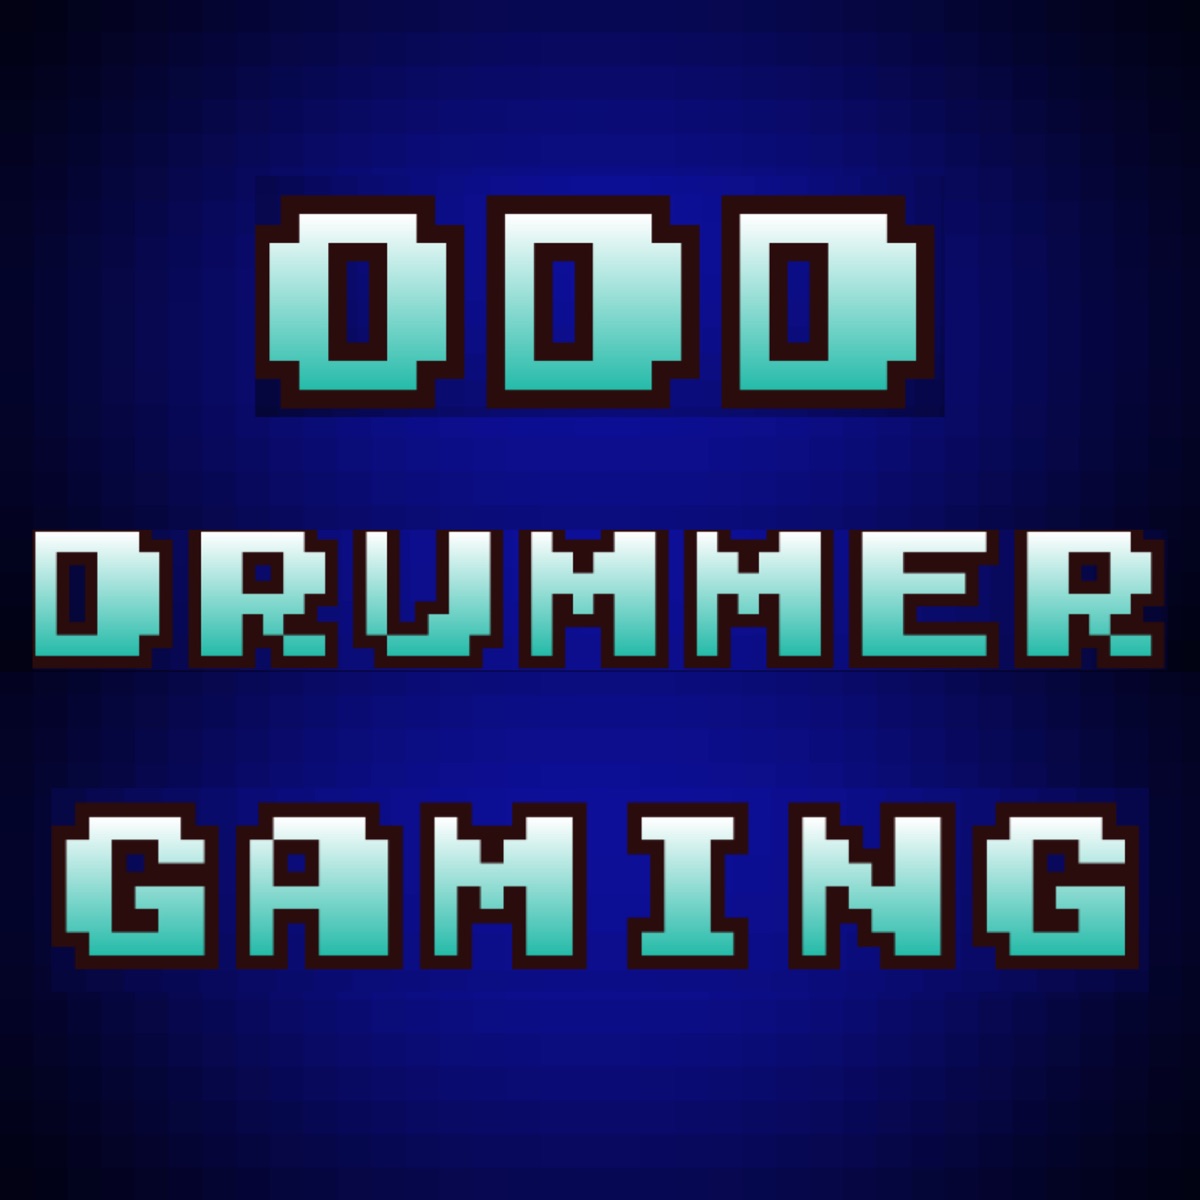 Odd Drummer Gaming